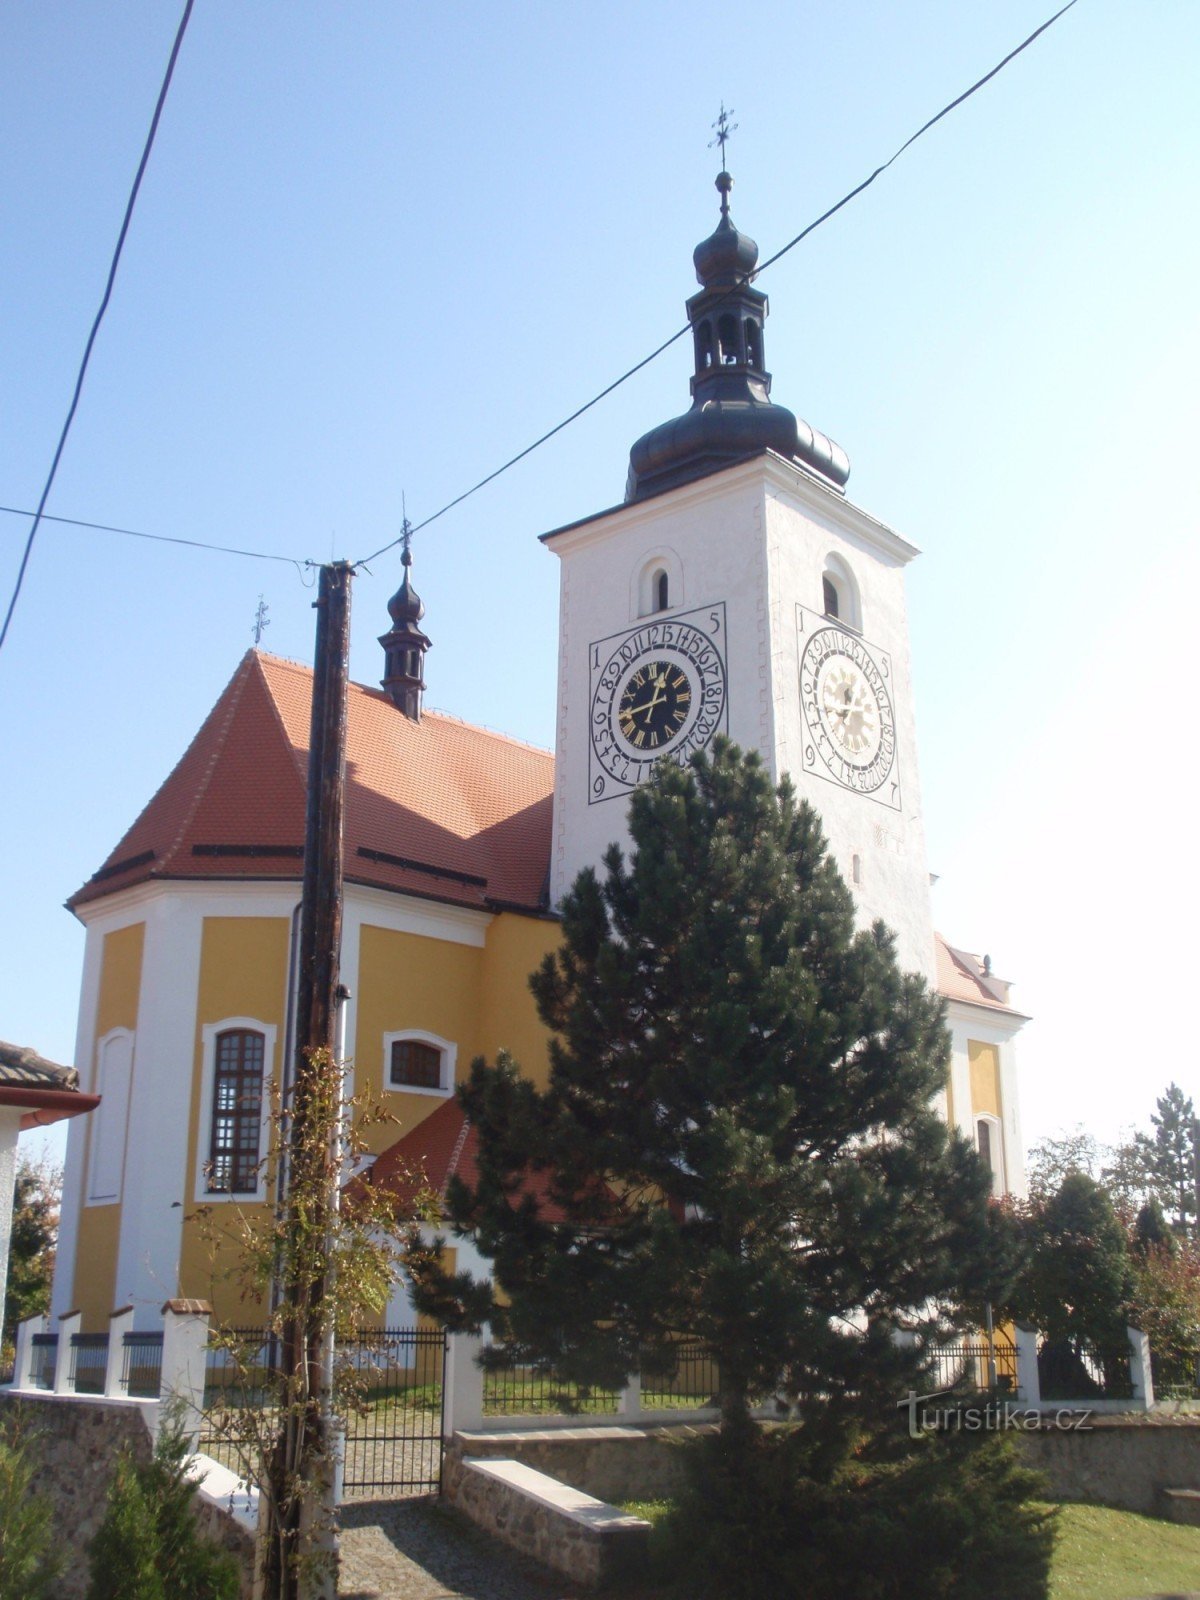 La ville de Stařeč près de Třebíč